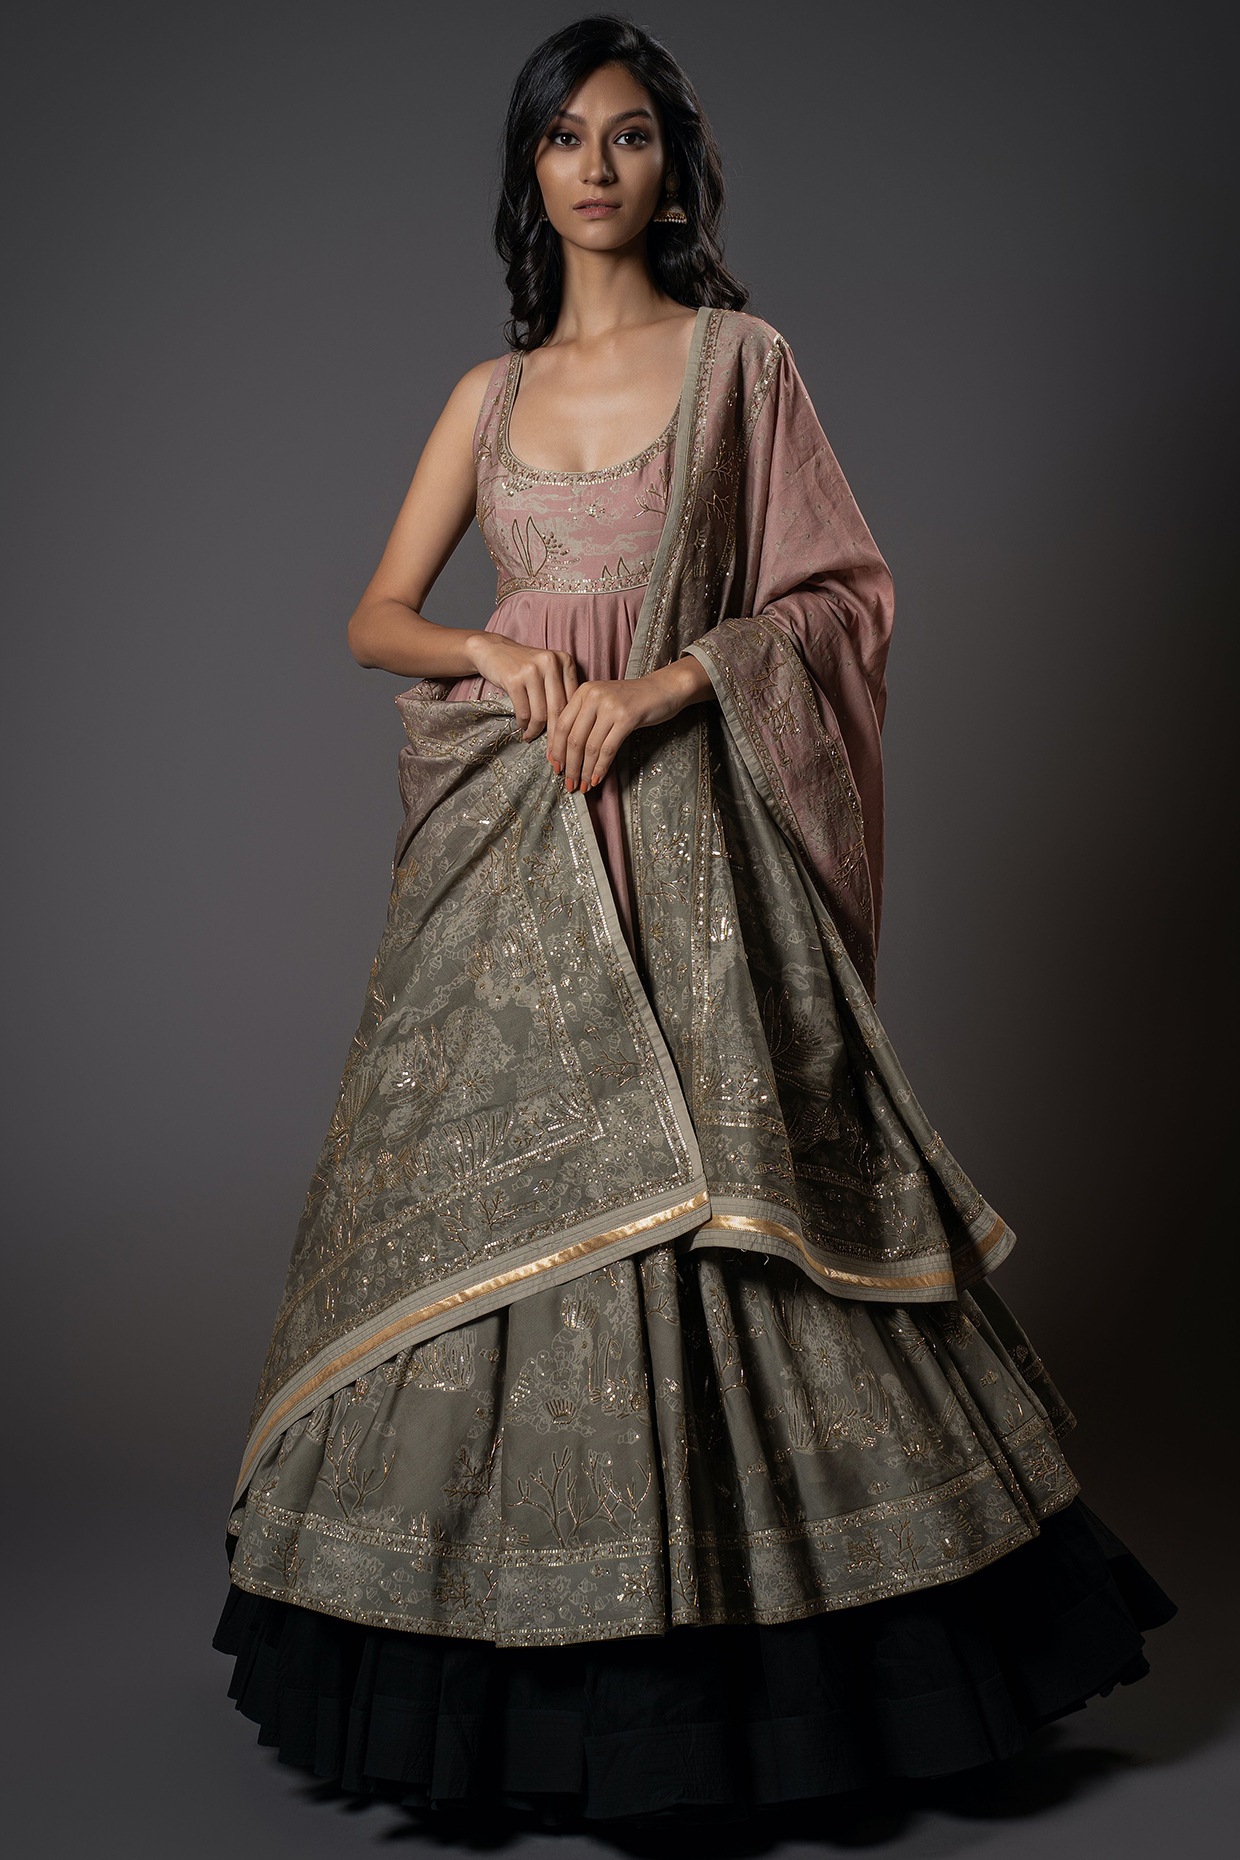 Bipasu Basu for Rohit Varma 1 | Indian bridal dress, Indian fashion, Fashion